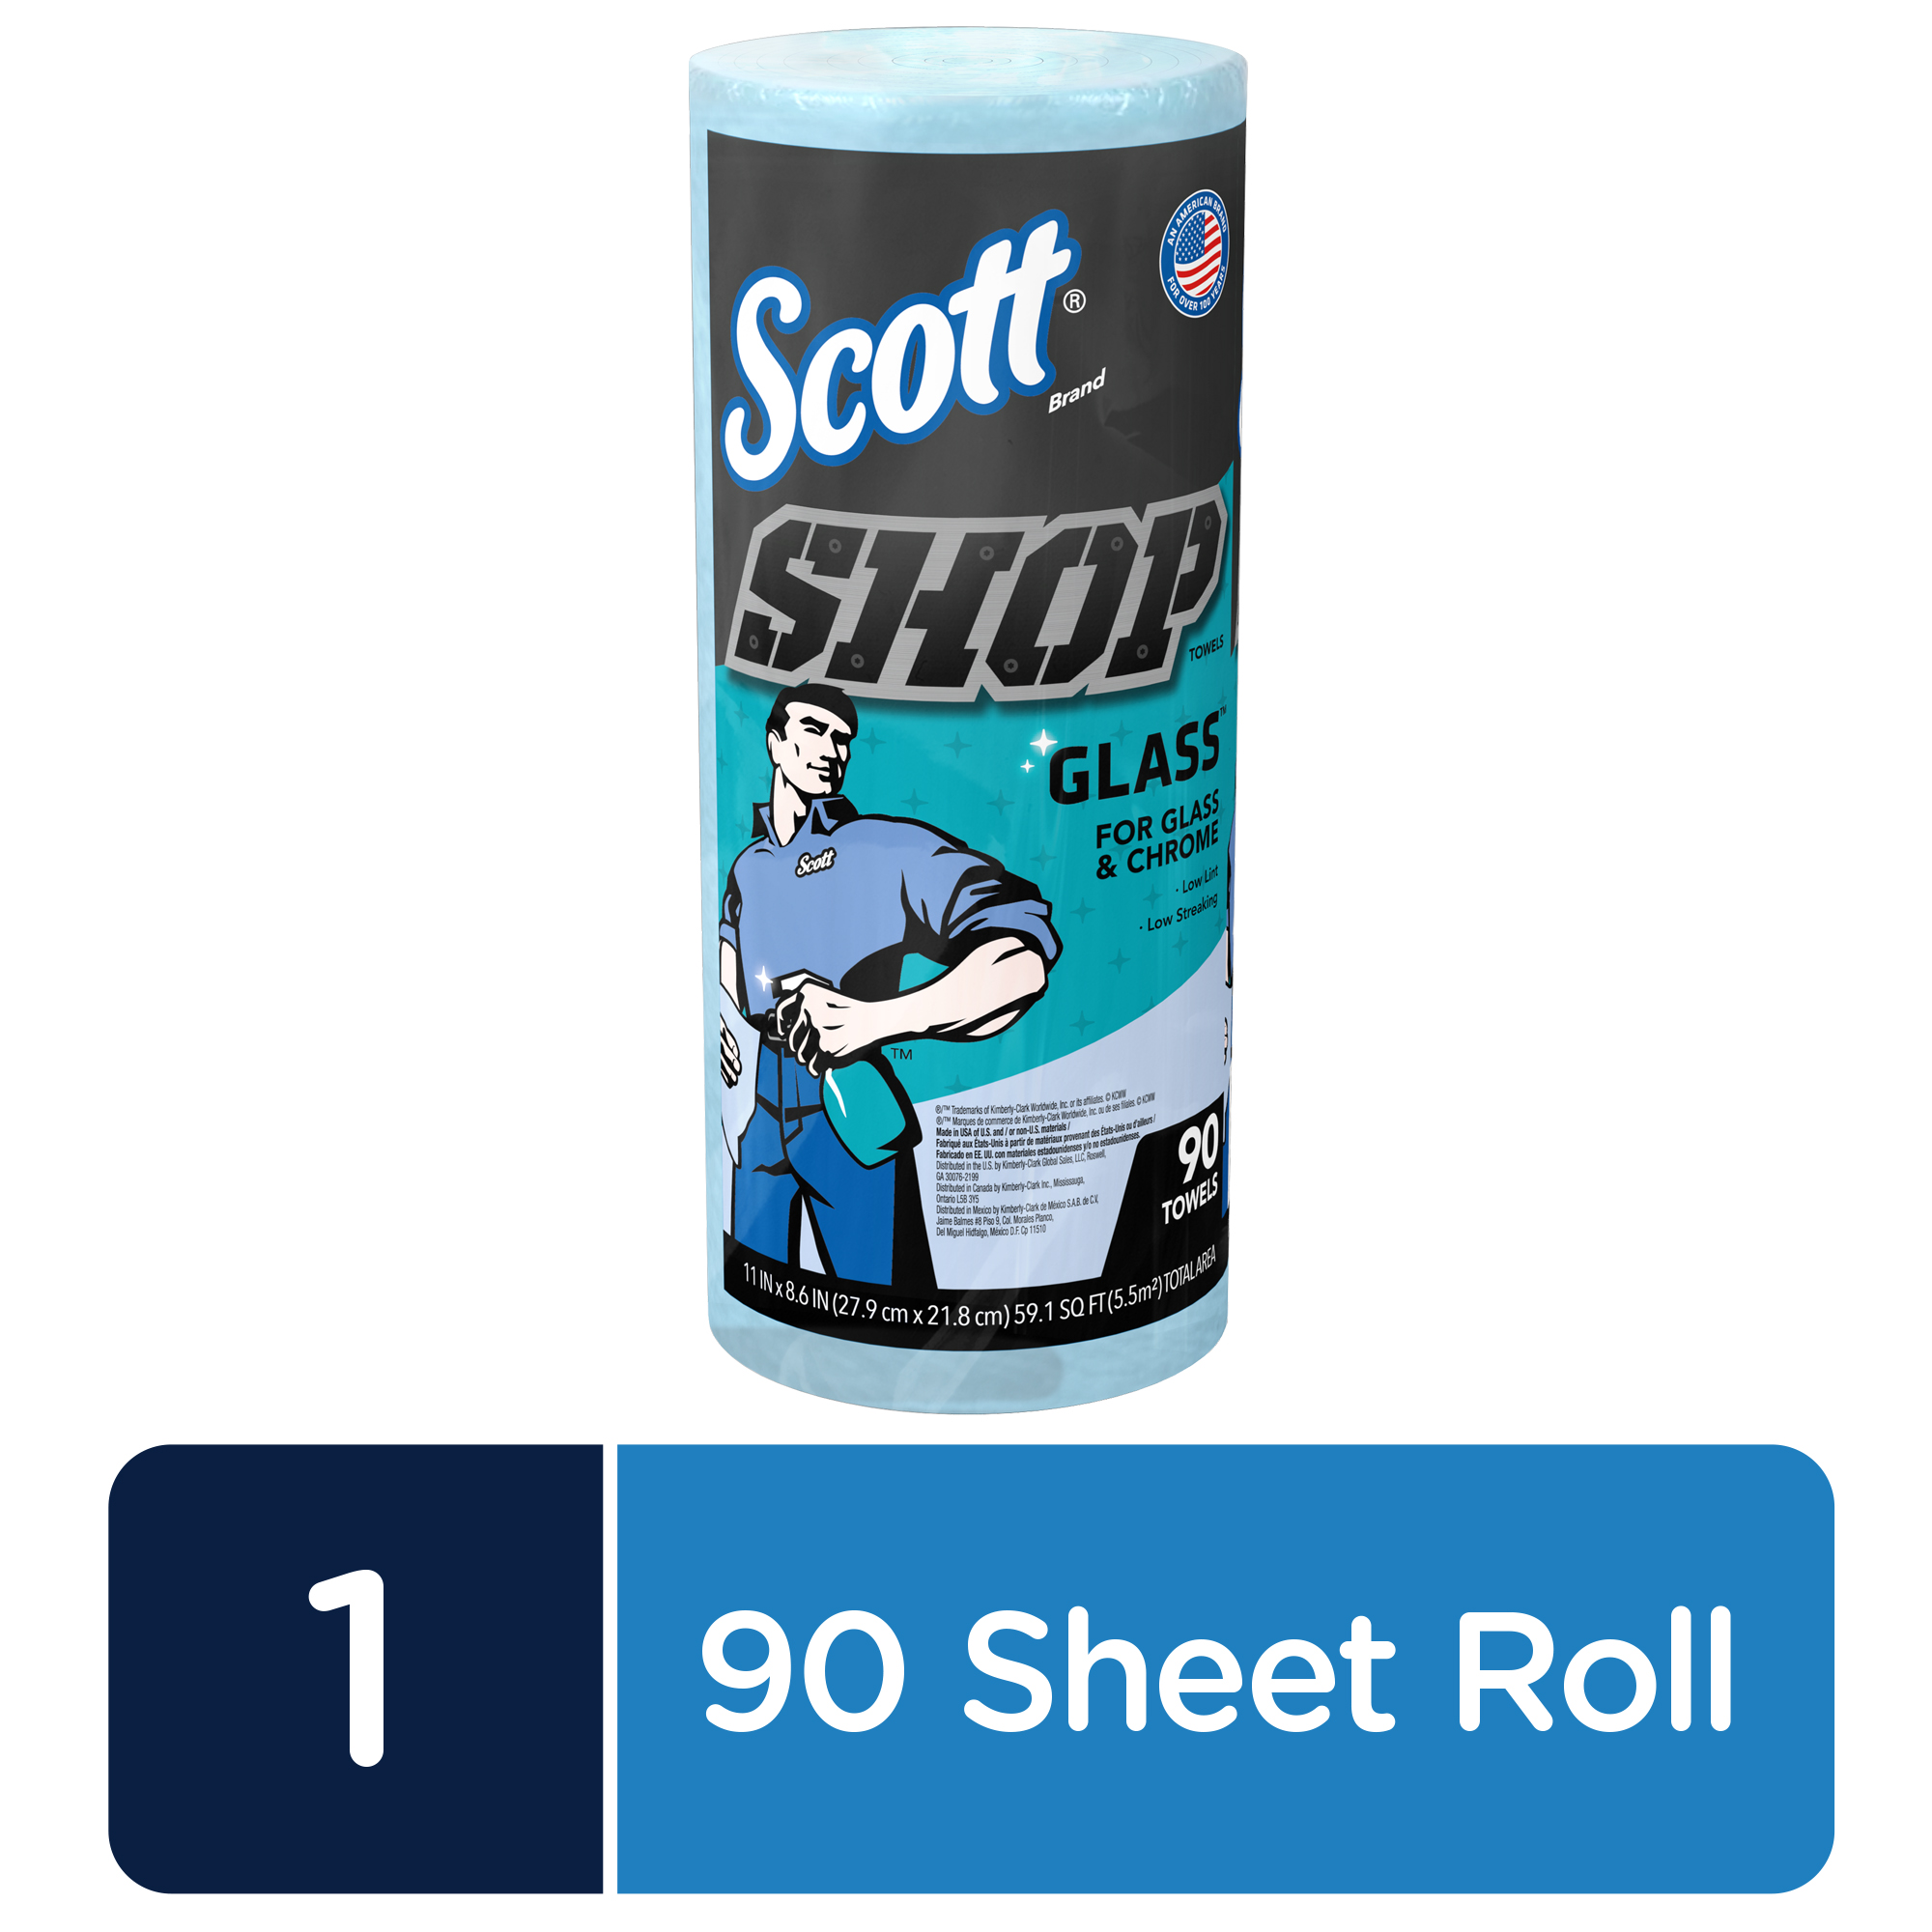 Scott Shop Towels Glass, 1 Roll, 90 sheets - image 1 of 8